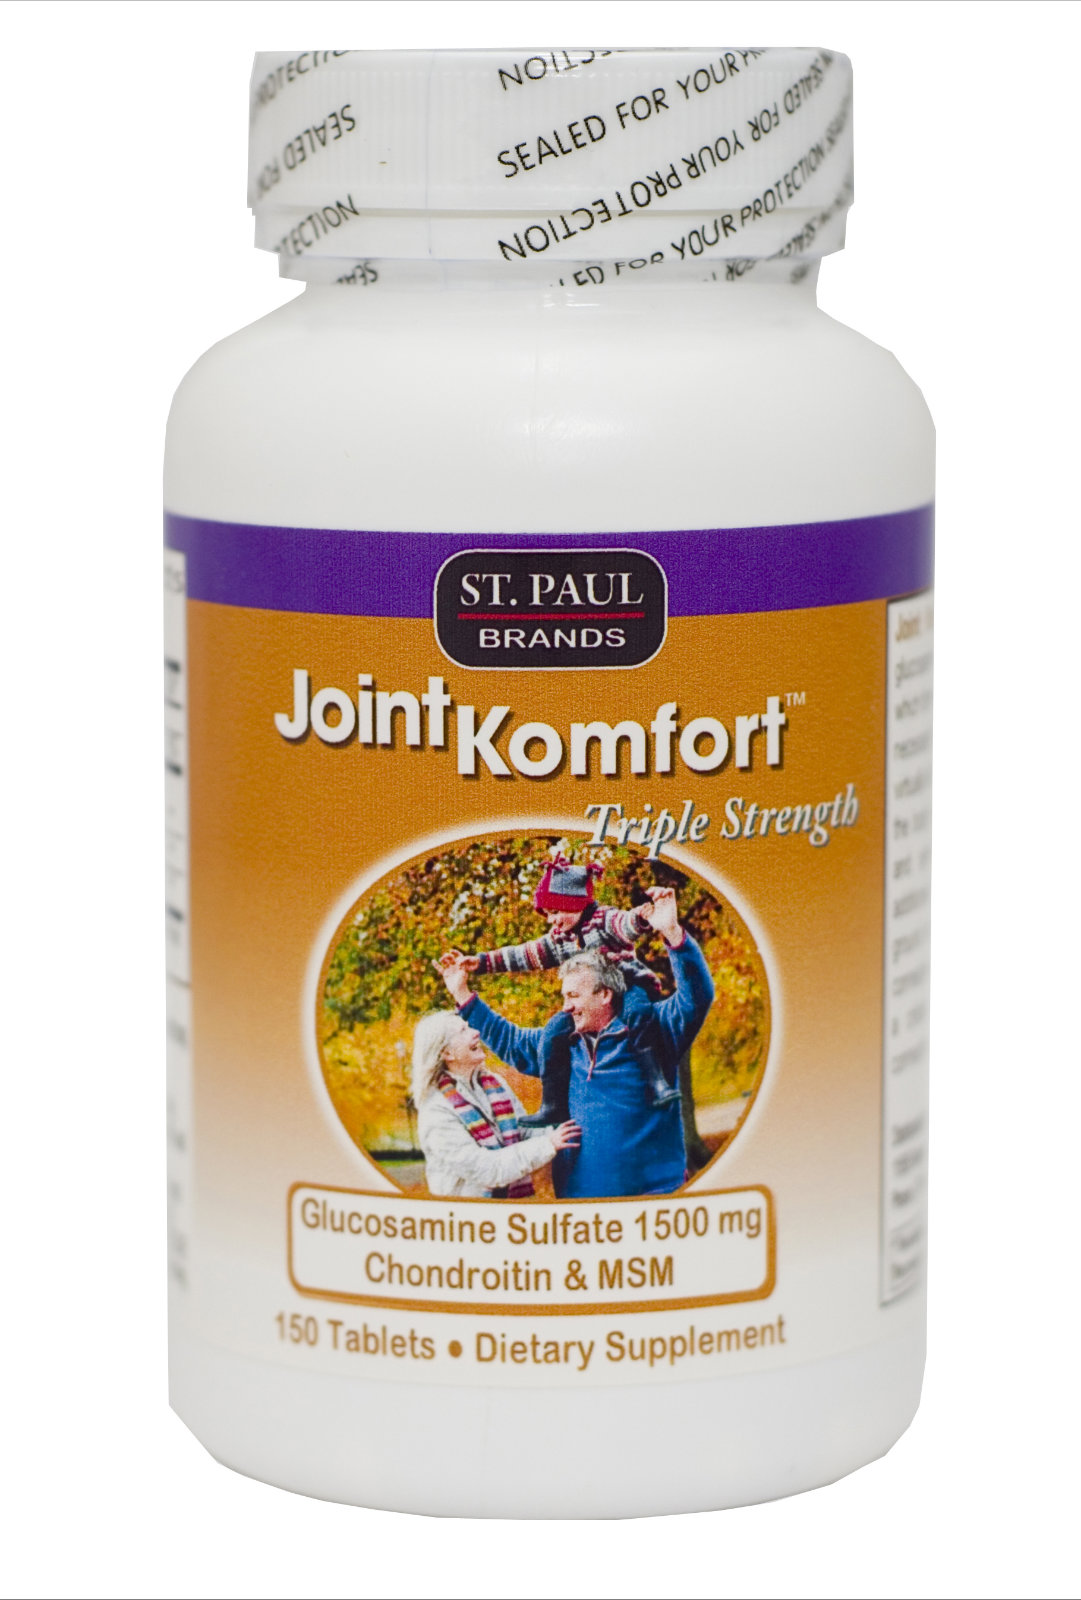 JOINT KOMFORT Triple Strength -  Glucosamine for Joint